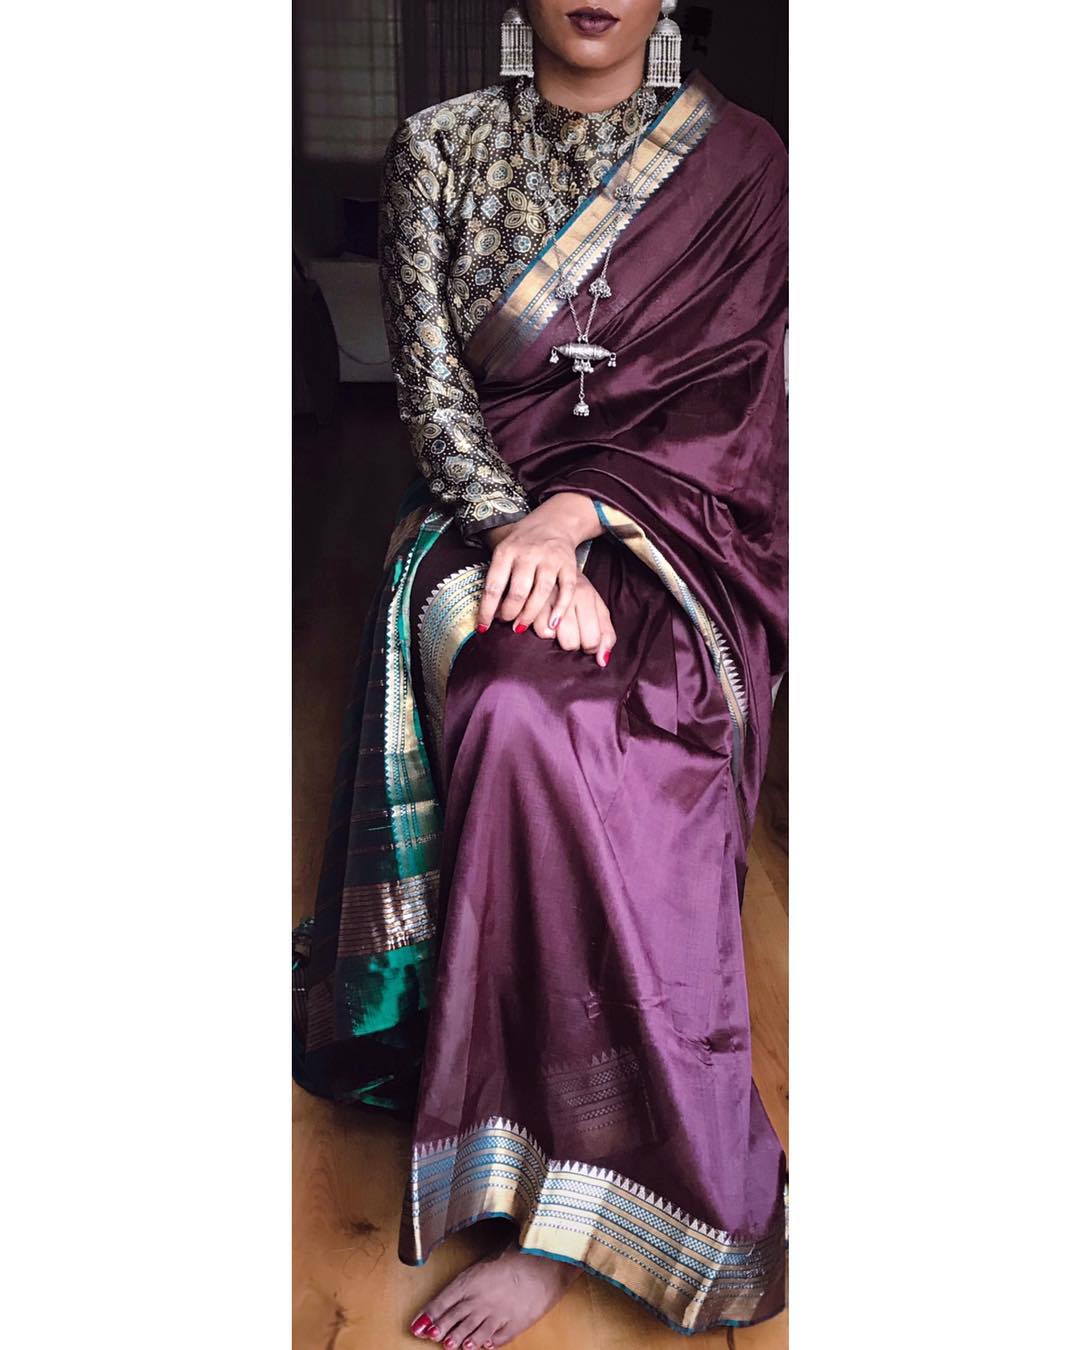 Ranjna Anaisha Fancy Border Work Blouse Designer Saree Collection